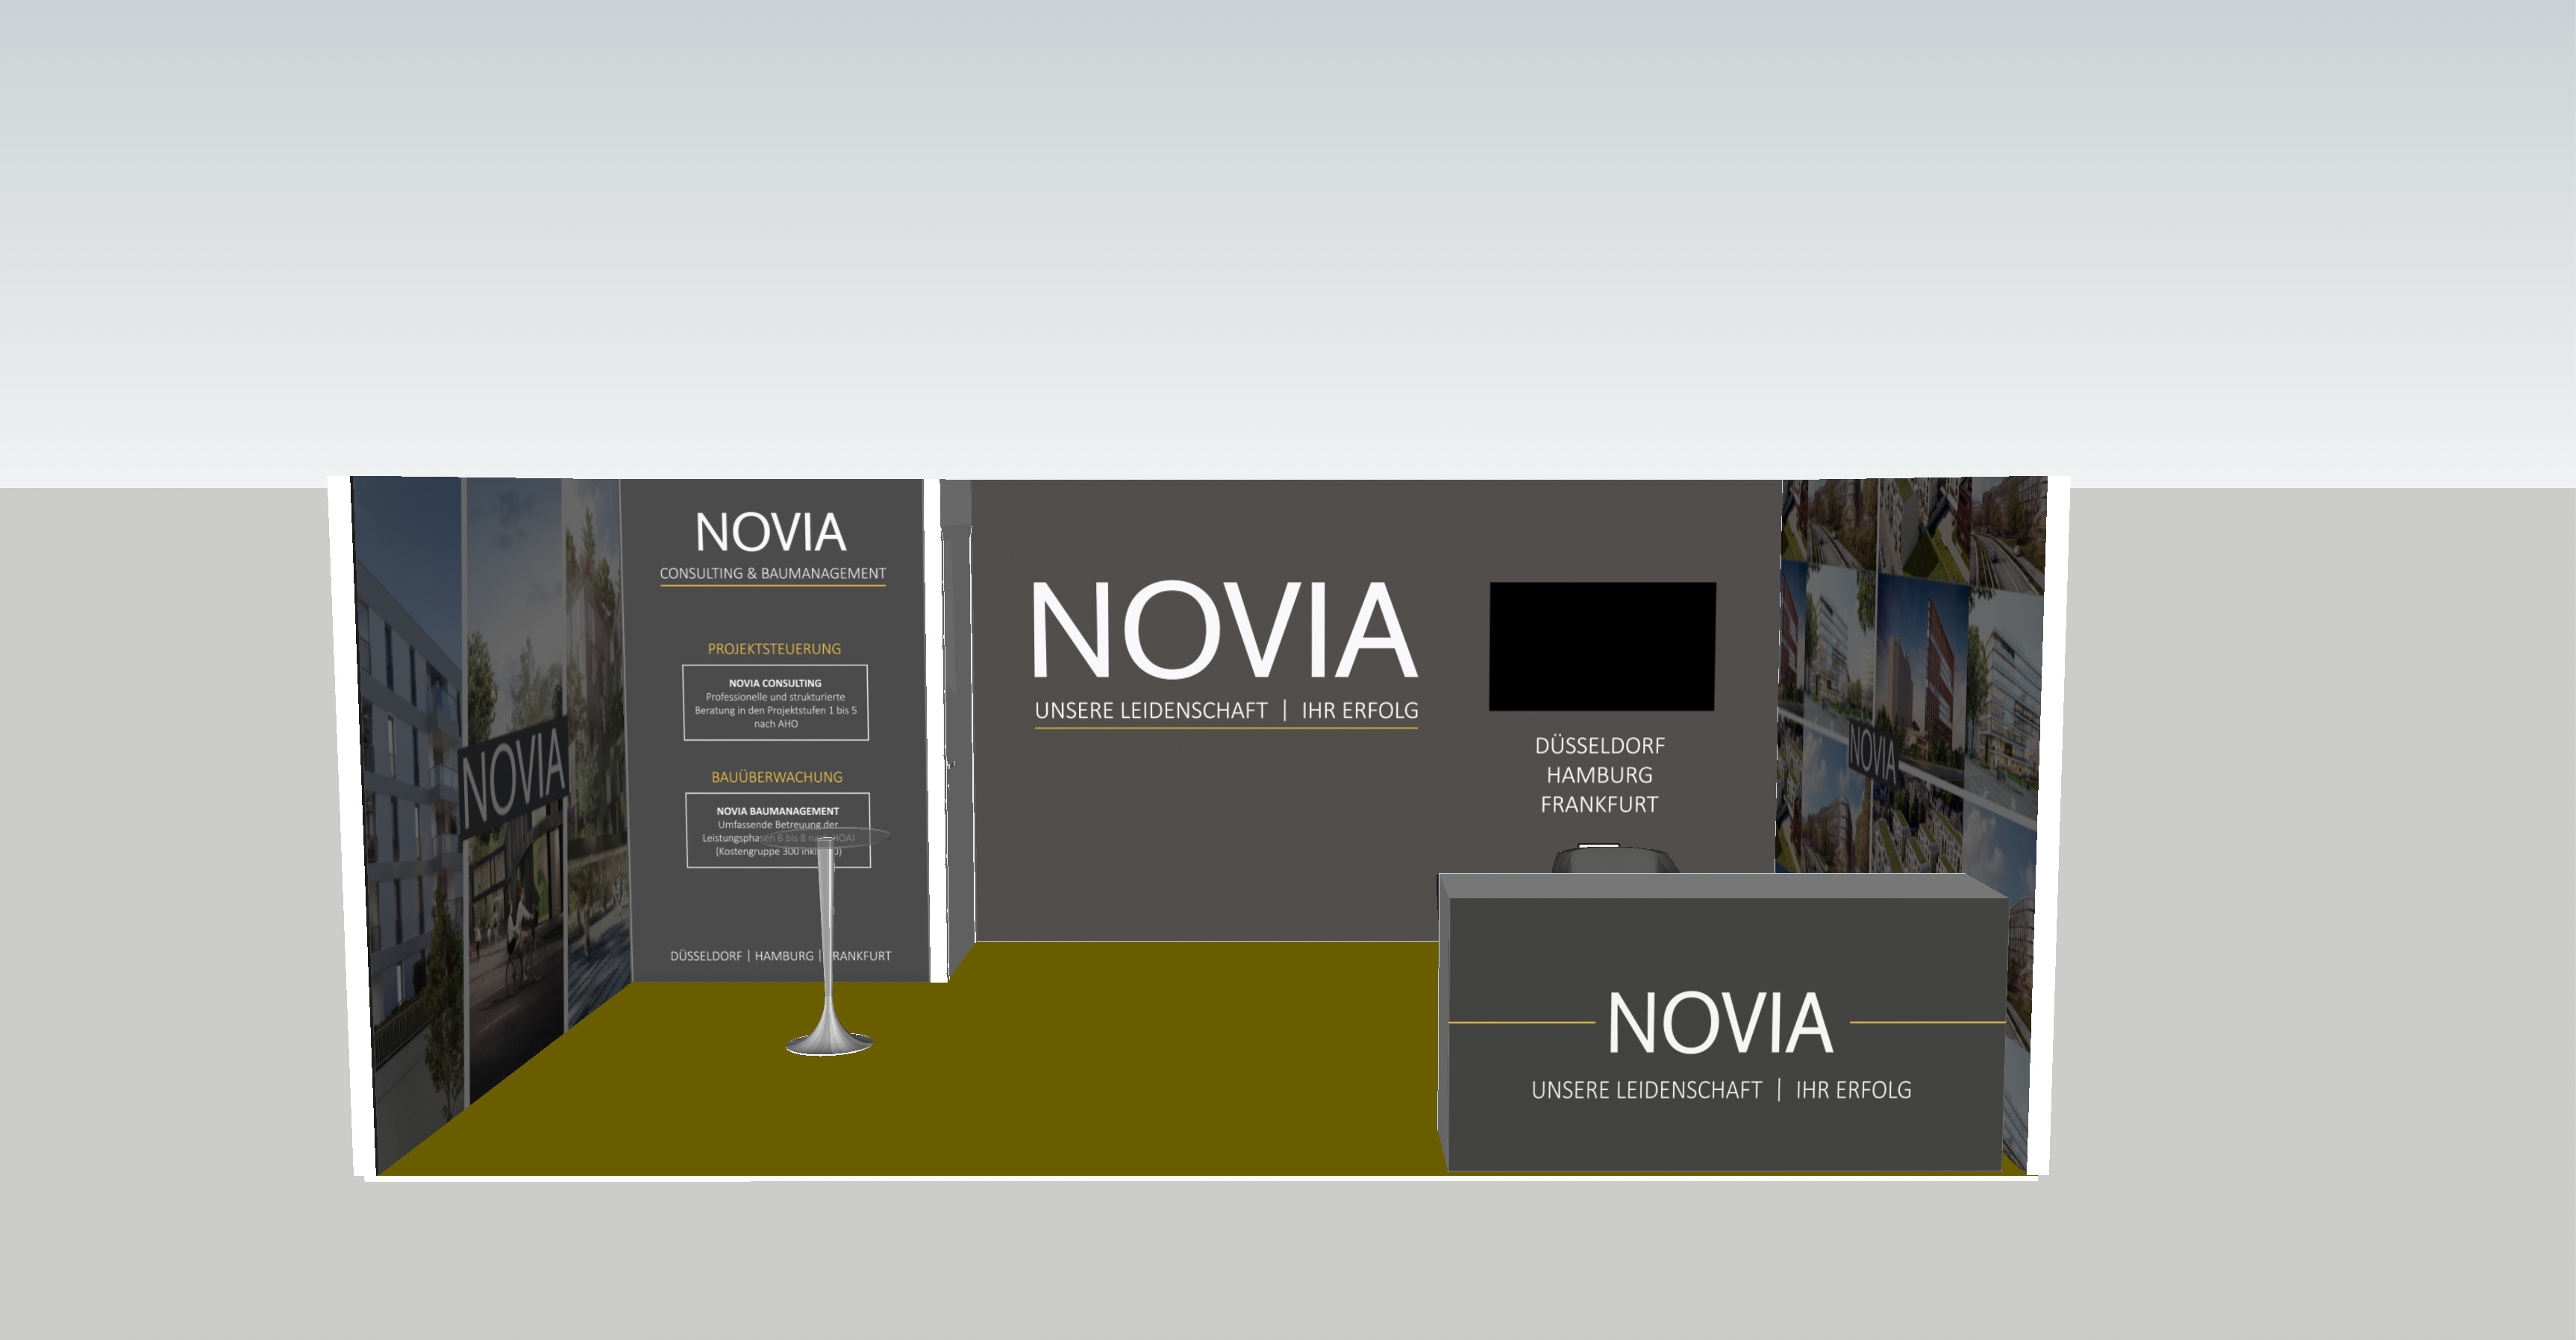 Stand der NOVIA Consulting & Baumanagement GmbH